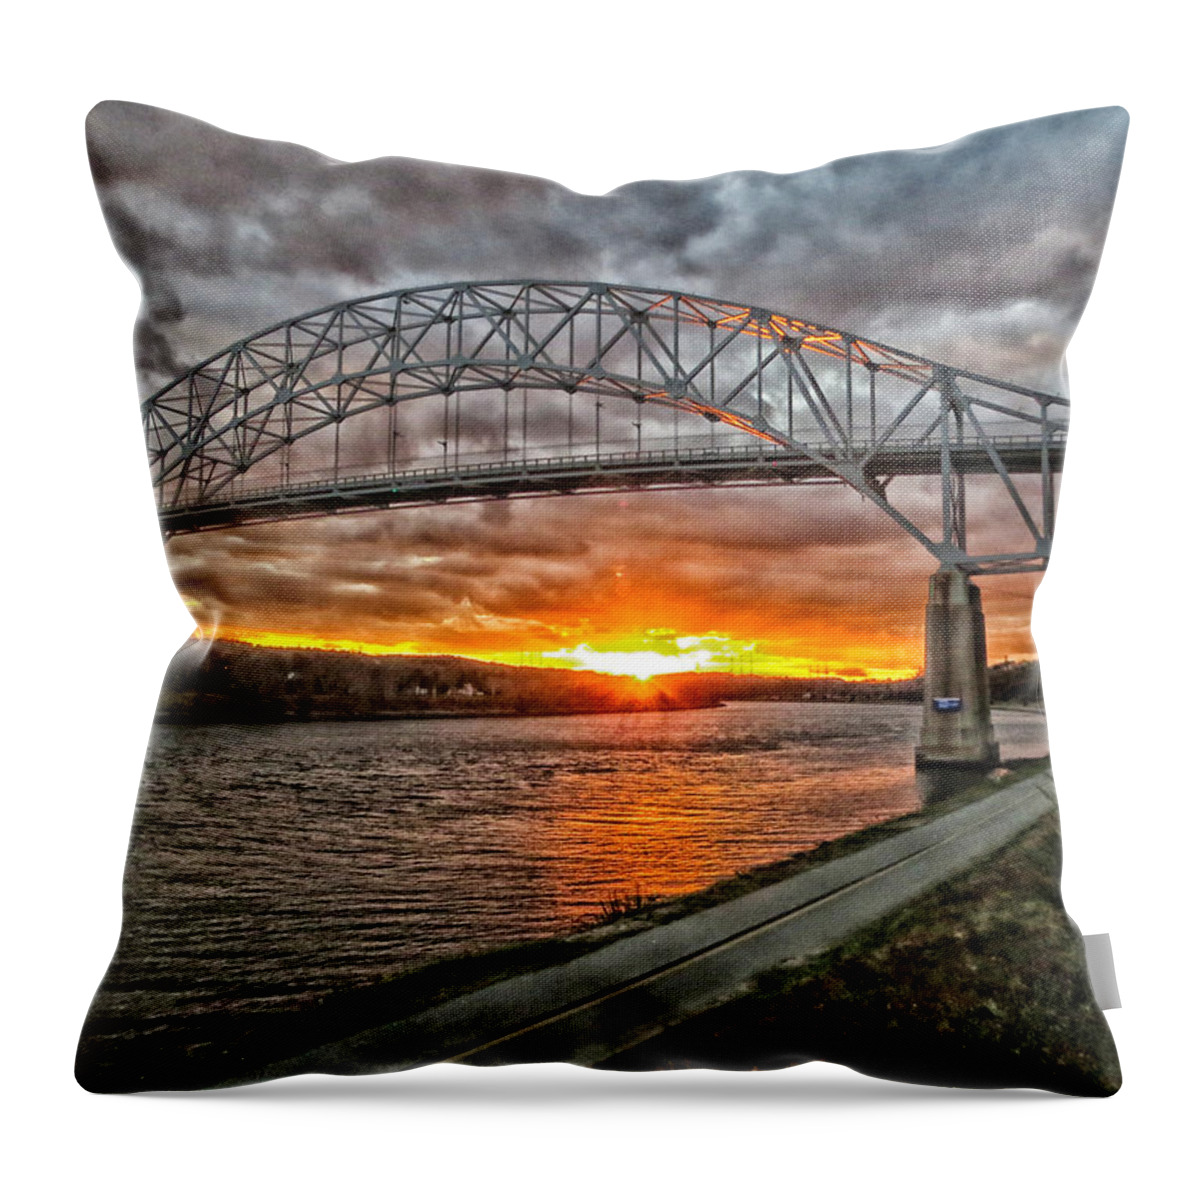 Sagamore Bridge Throw Pillow featuring the photograph Sagamore Bridge Sunset by Constantine Gregory